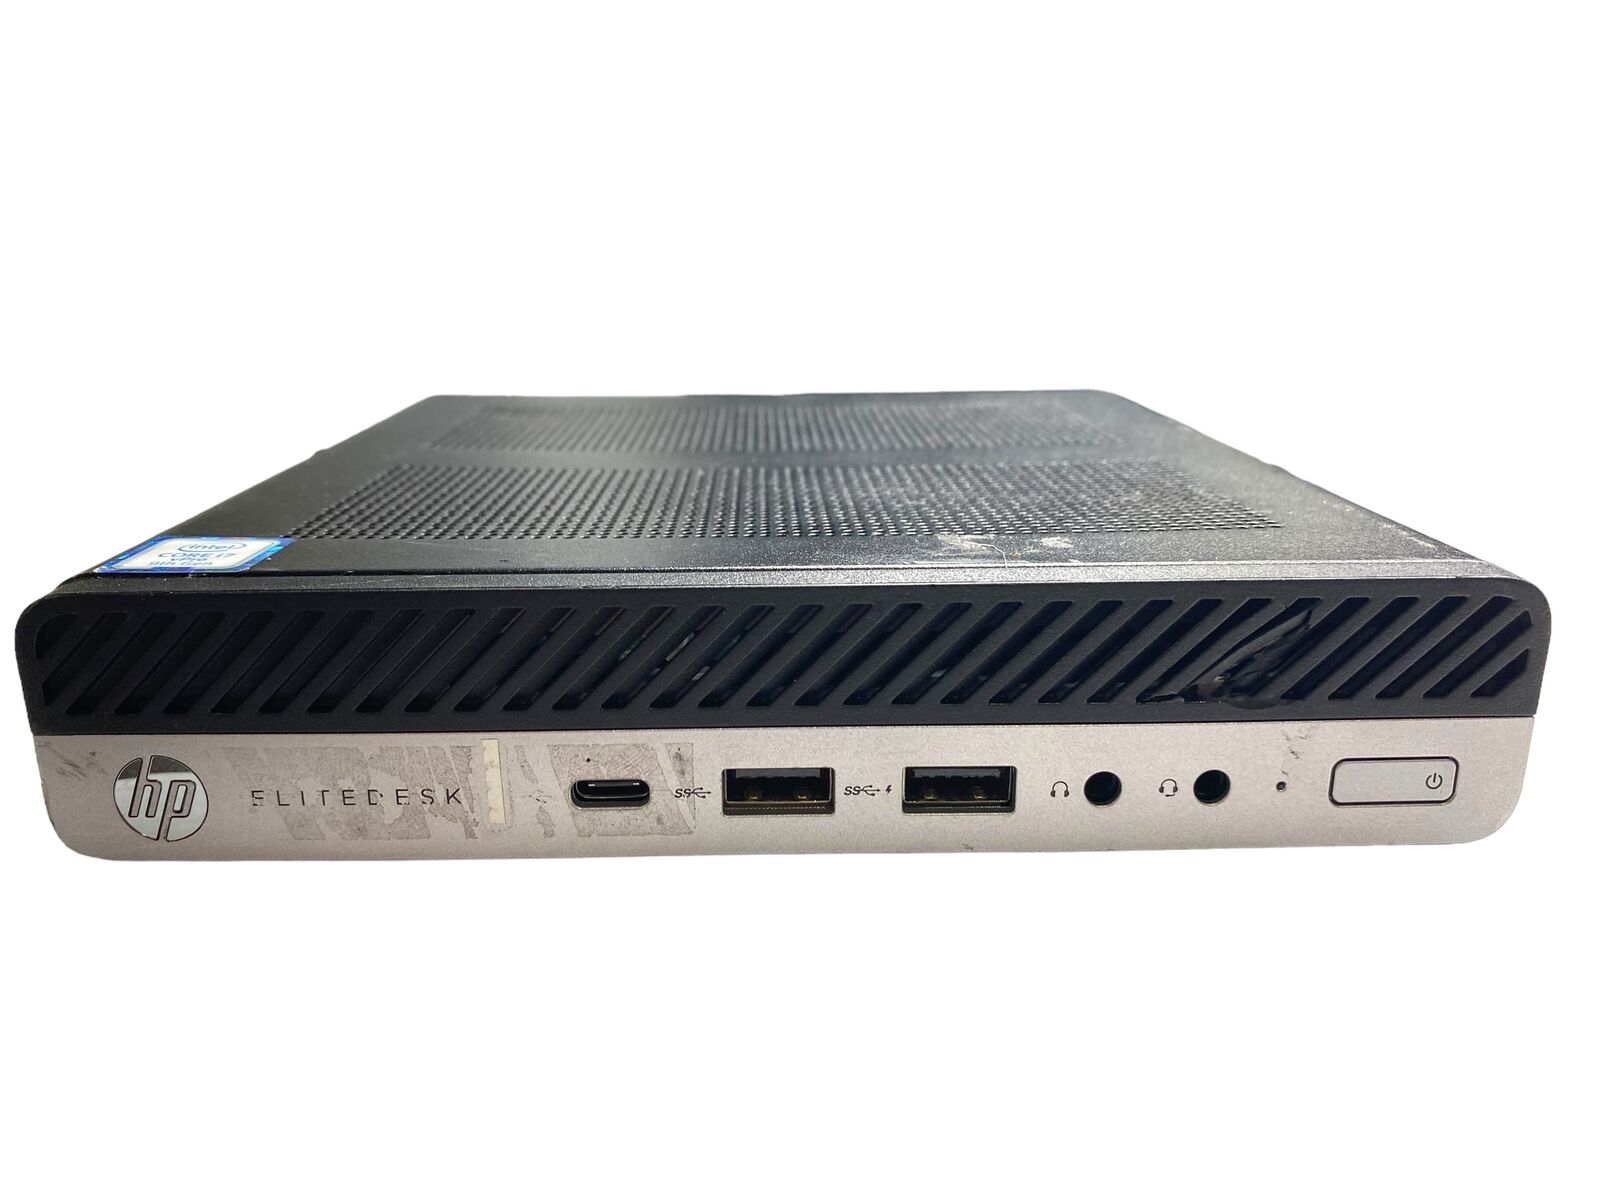 HP EliteDesk 800 G4 I7-8700 3.20GHz 250GB SSD 8GB RAM Desktop